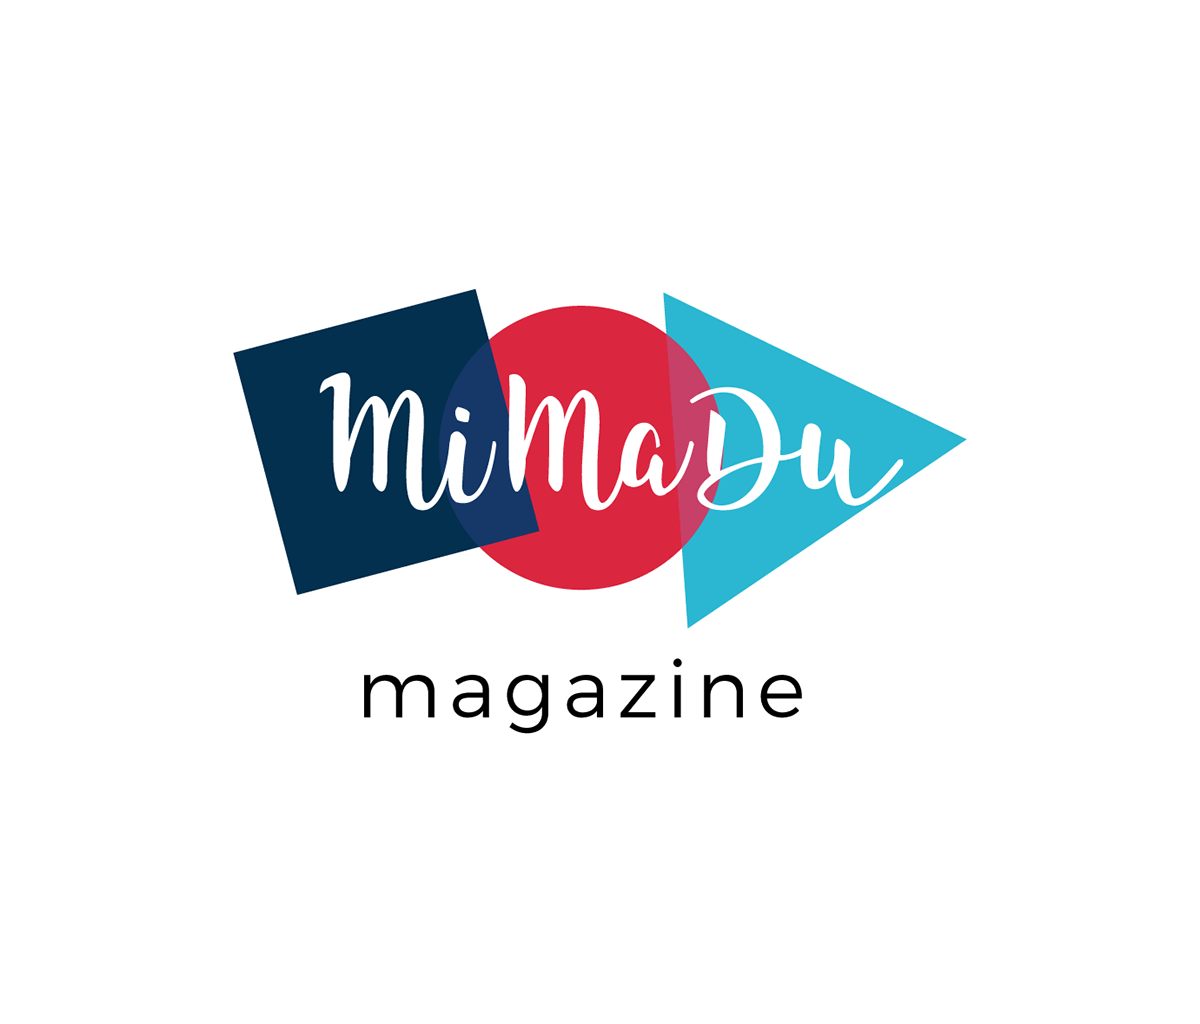 Canvas Magazine Logo - MiMaDu Magazine - Logo Design on Pantone Canvas Gallery